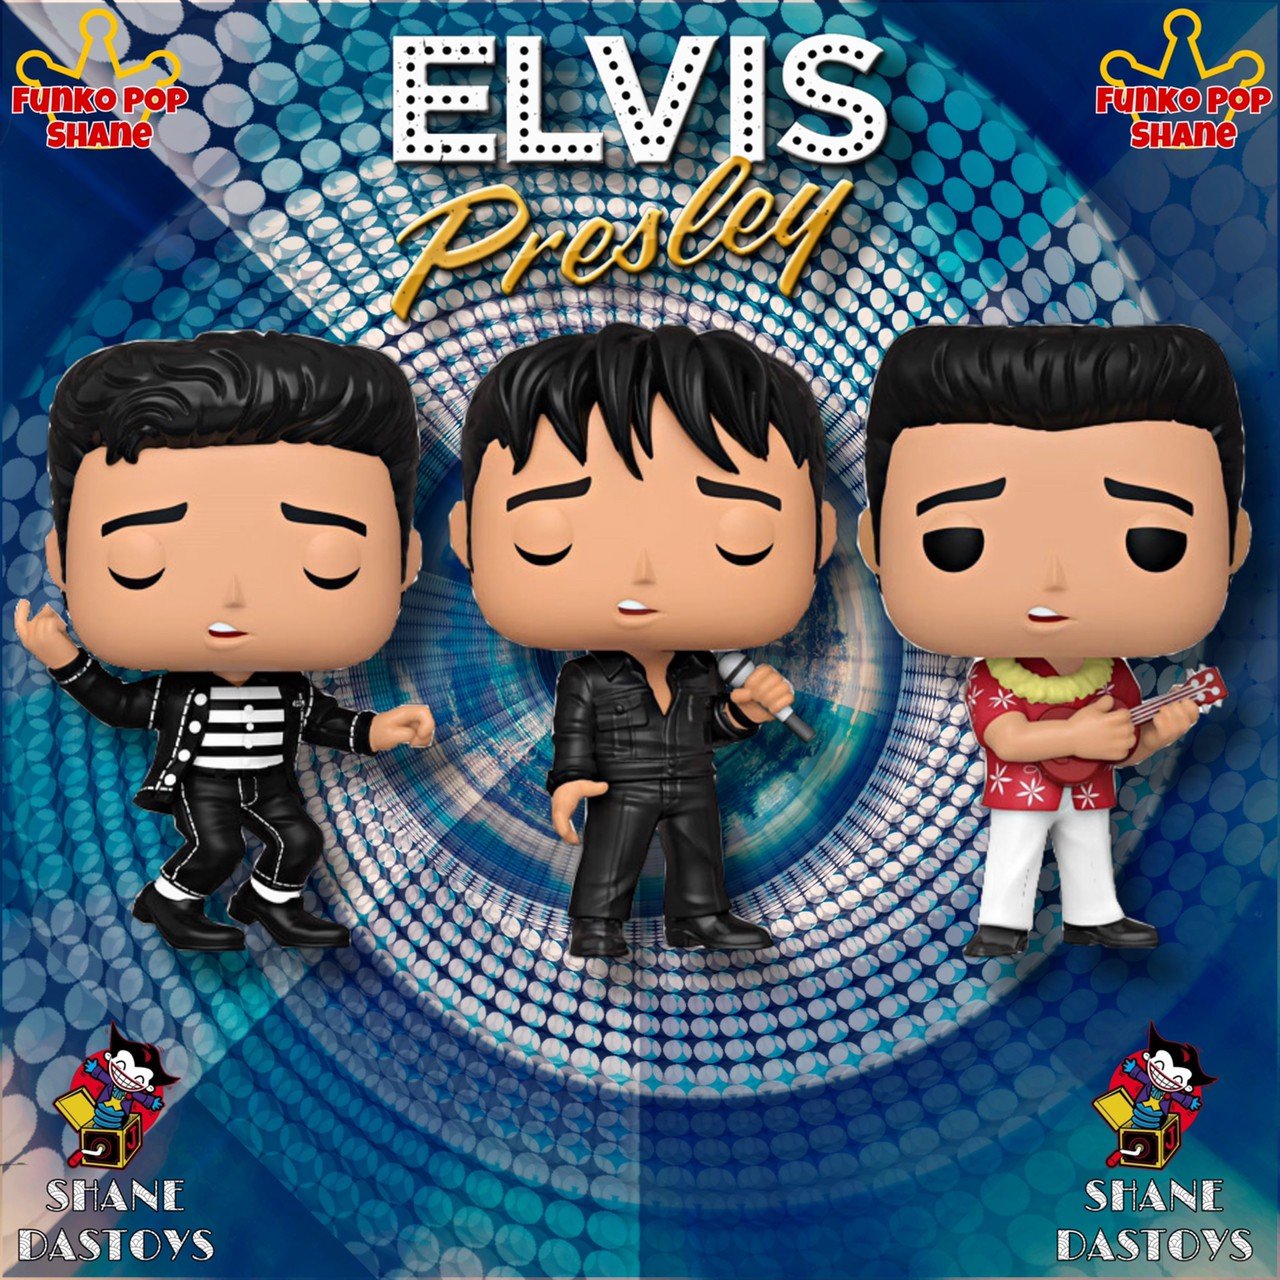 Funko Pop! Elvis Presley